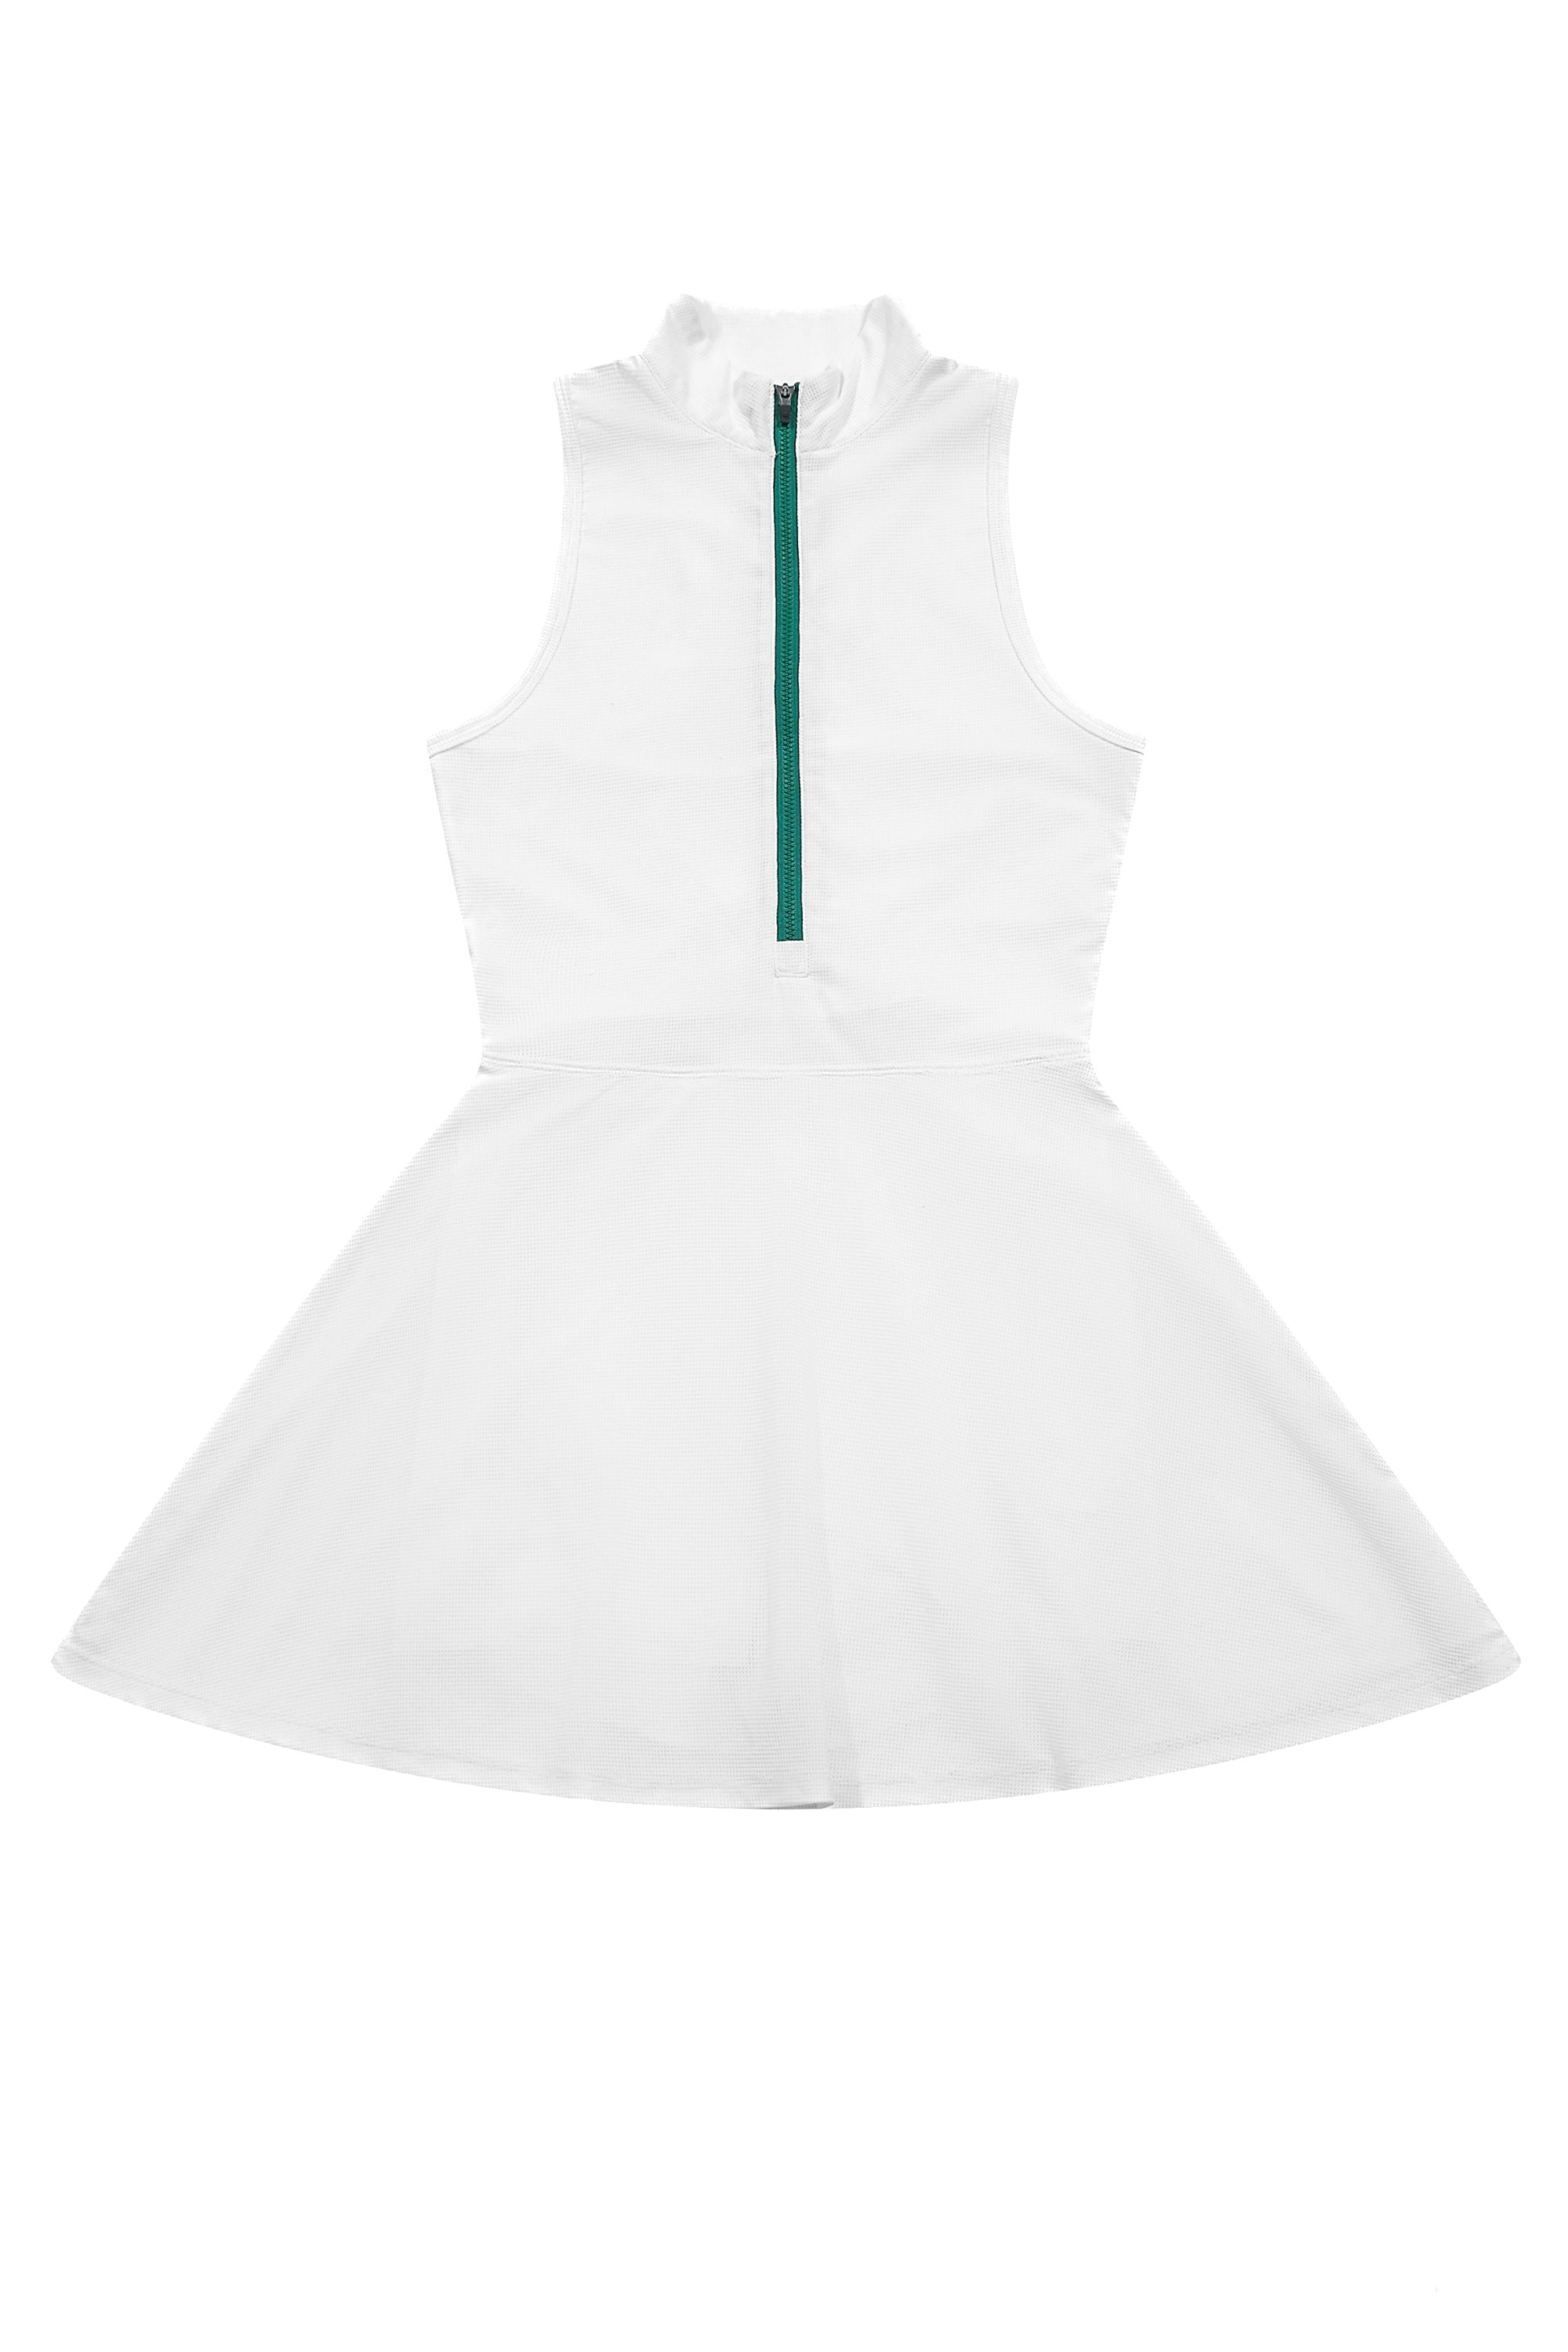 Beva Tennis Dress